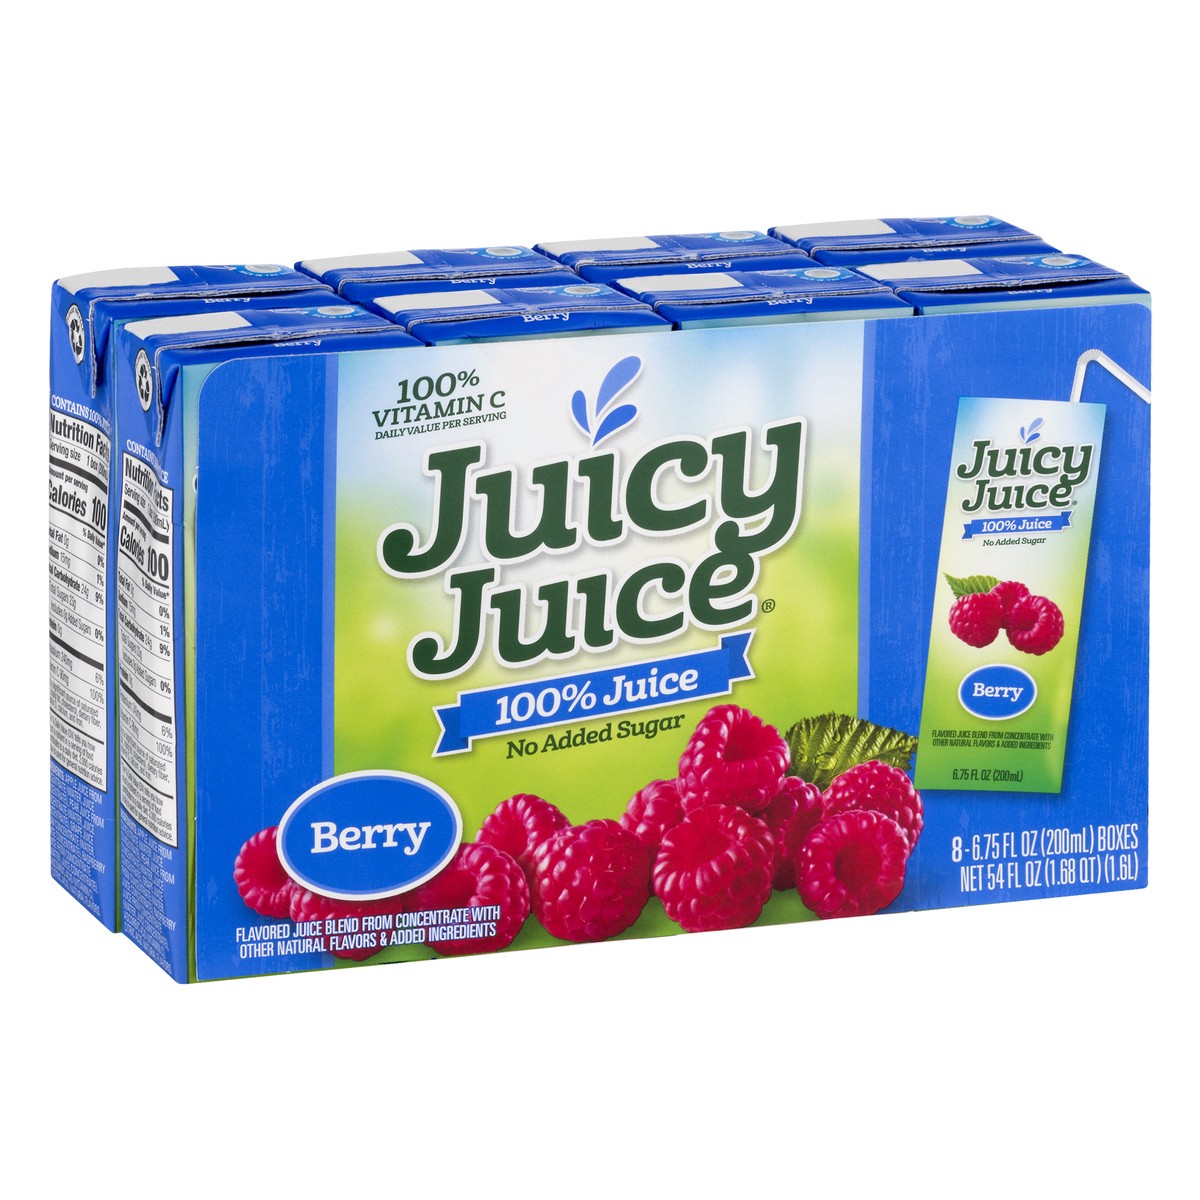 slide 2 of 9, Juicy Juice 100% Juice, Berry, 8 Count, 6.75 FL OZ Juice Boxes, 6.75 fl oz